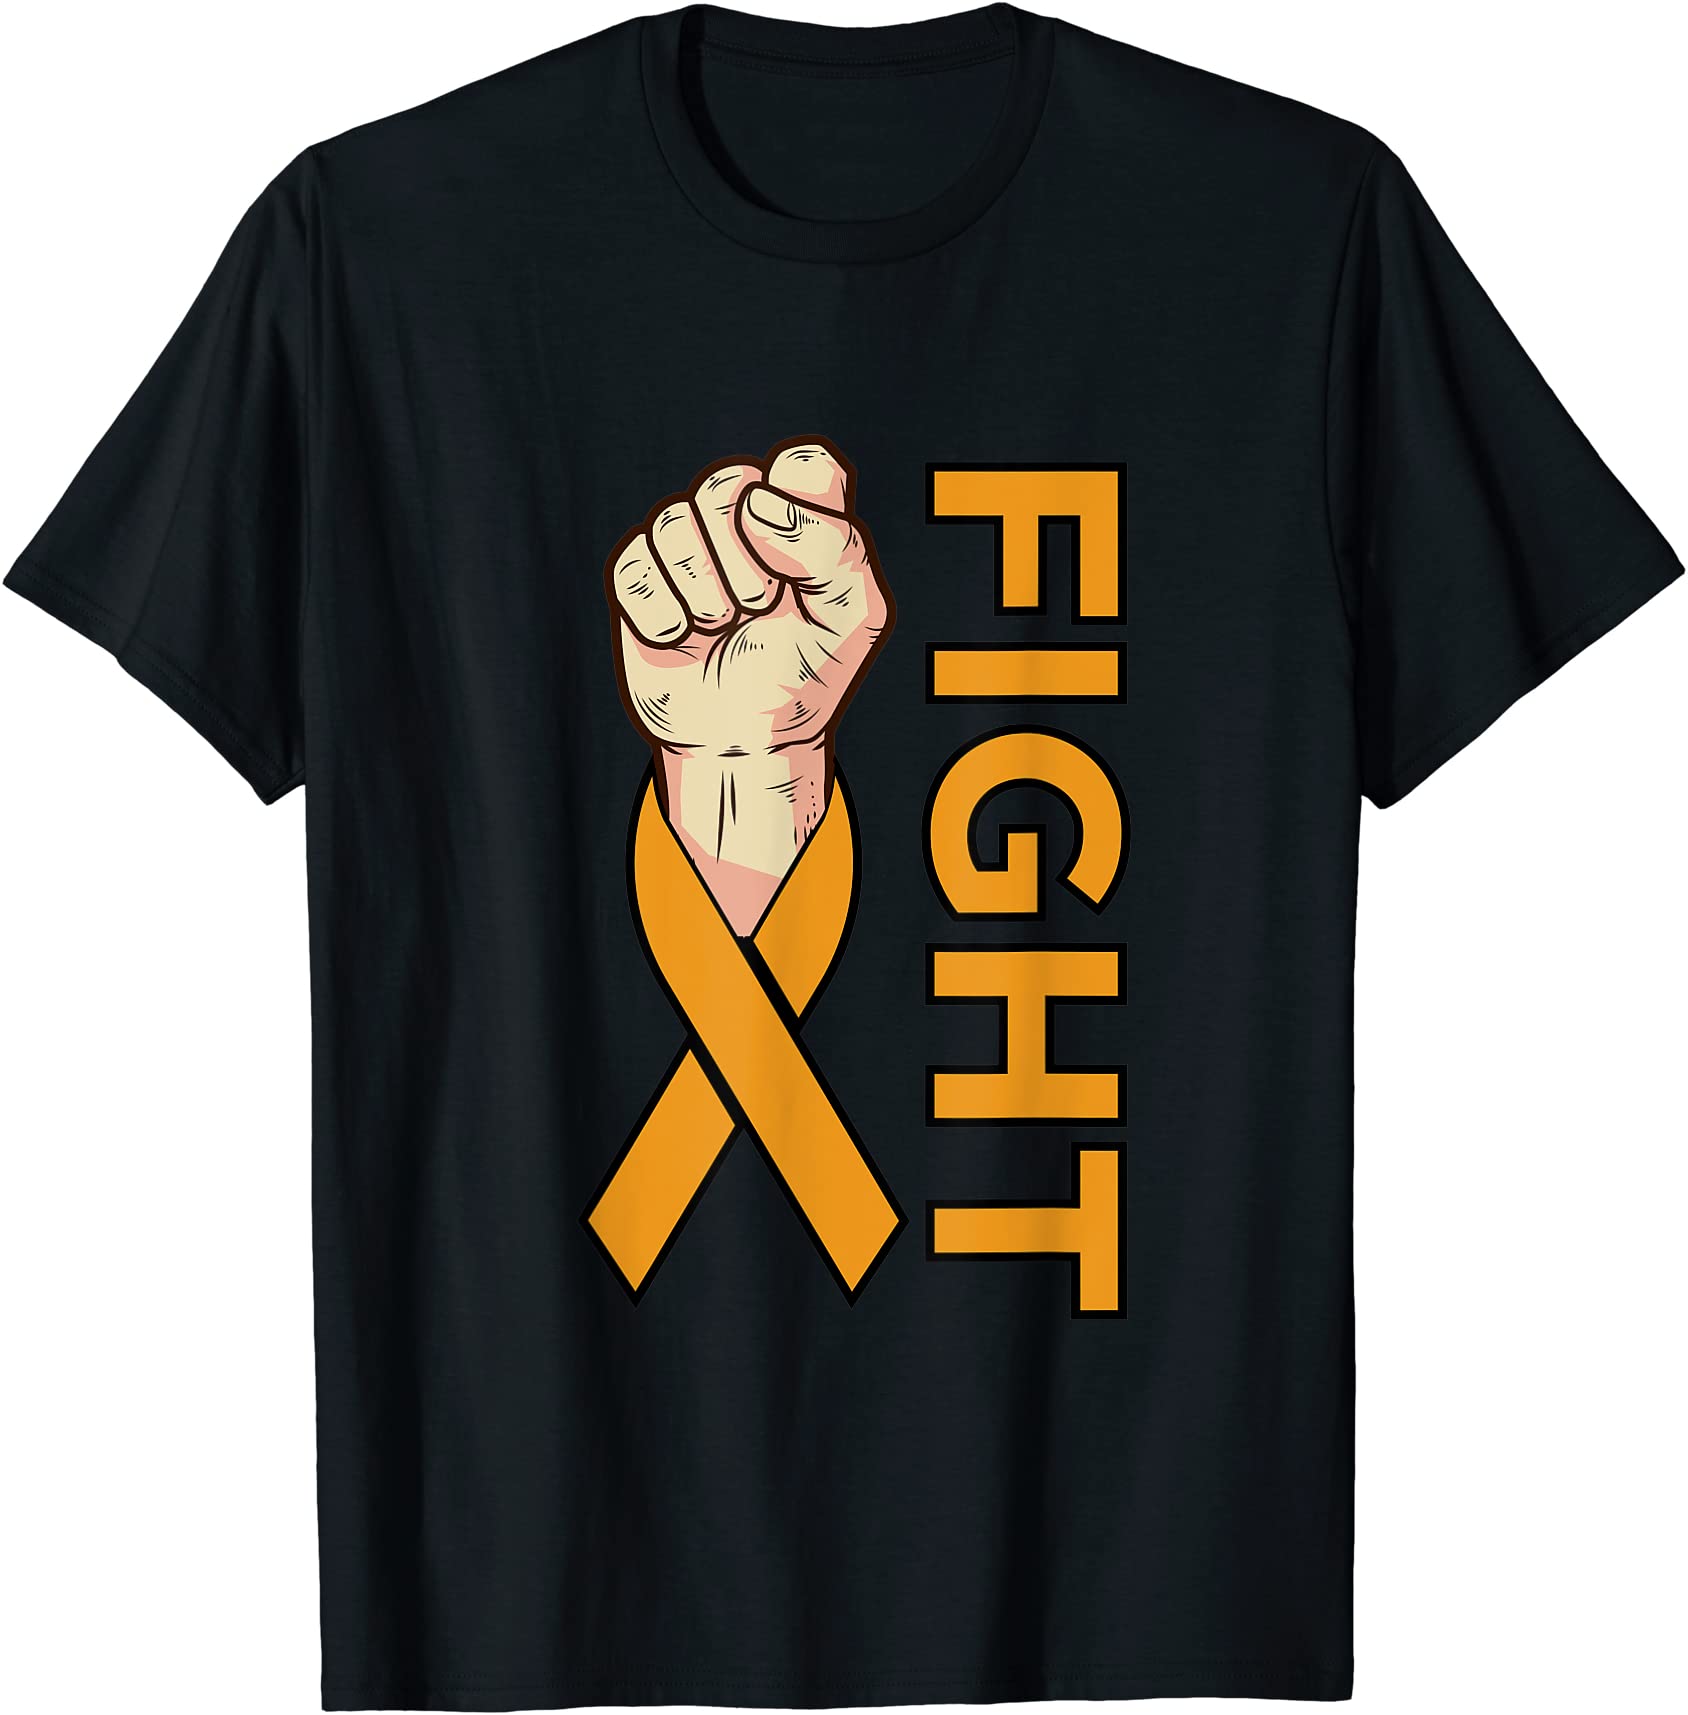 fight leukemia cancer orange ribbon awareness support t shirt men - Buy ...